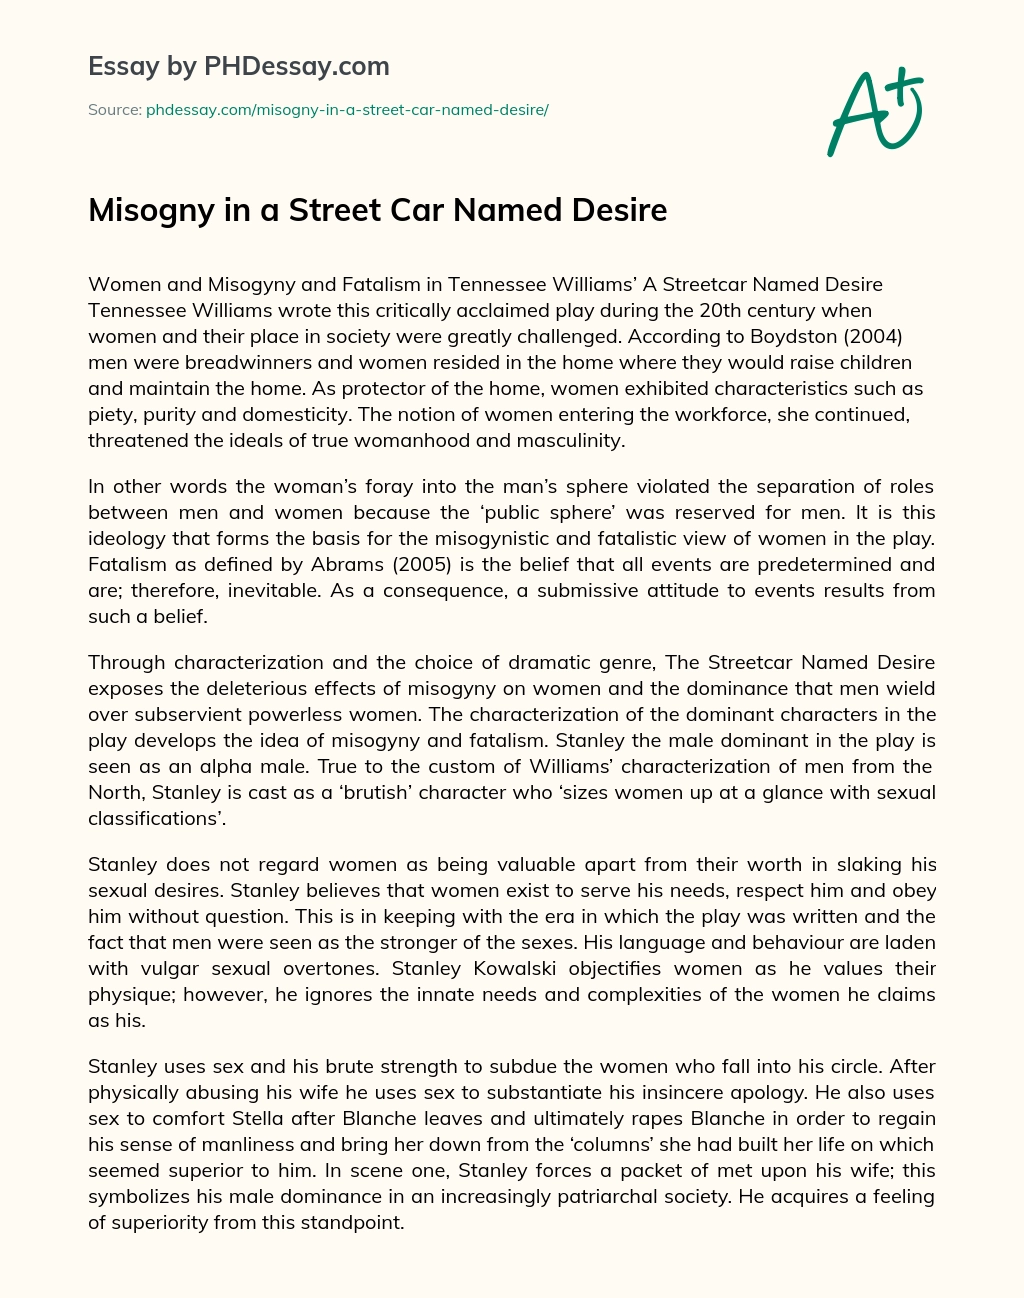 Misogny in a Street Car Named Desire essay